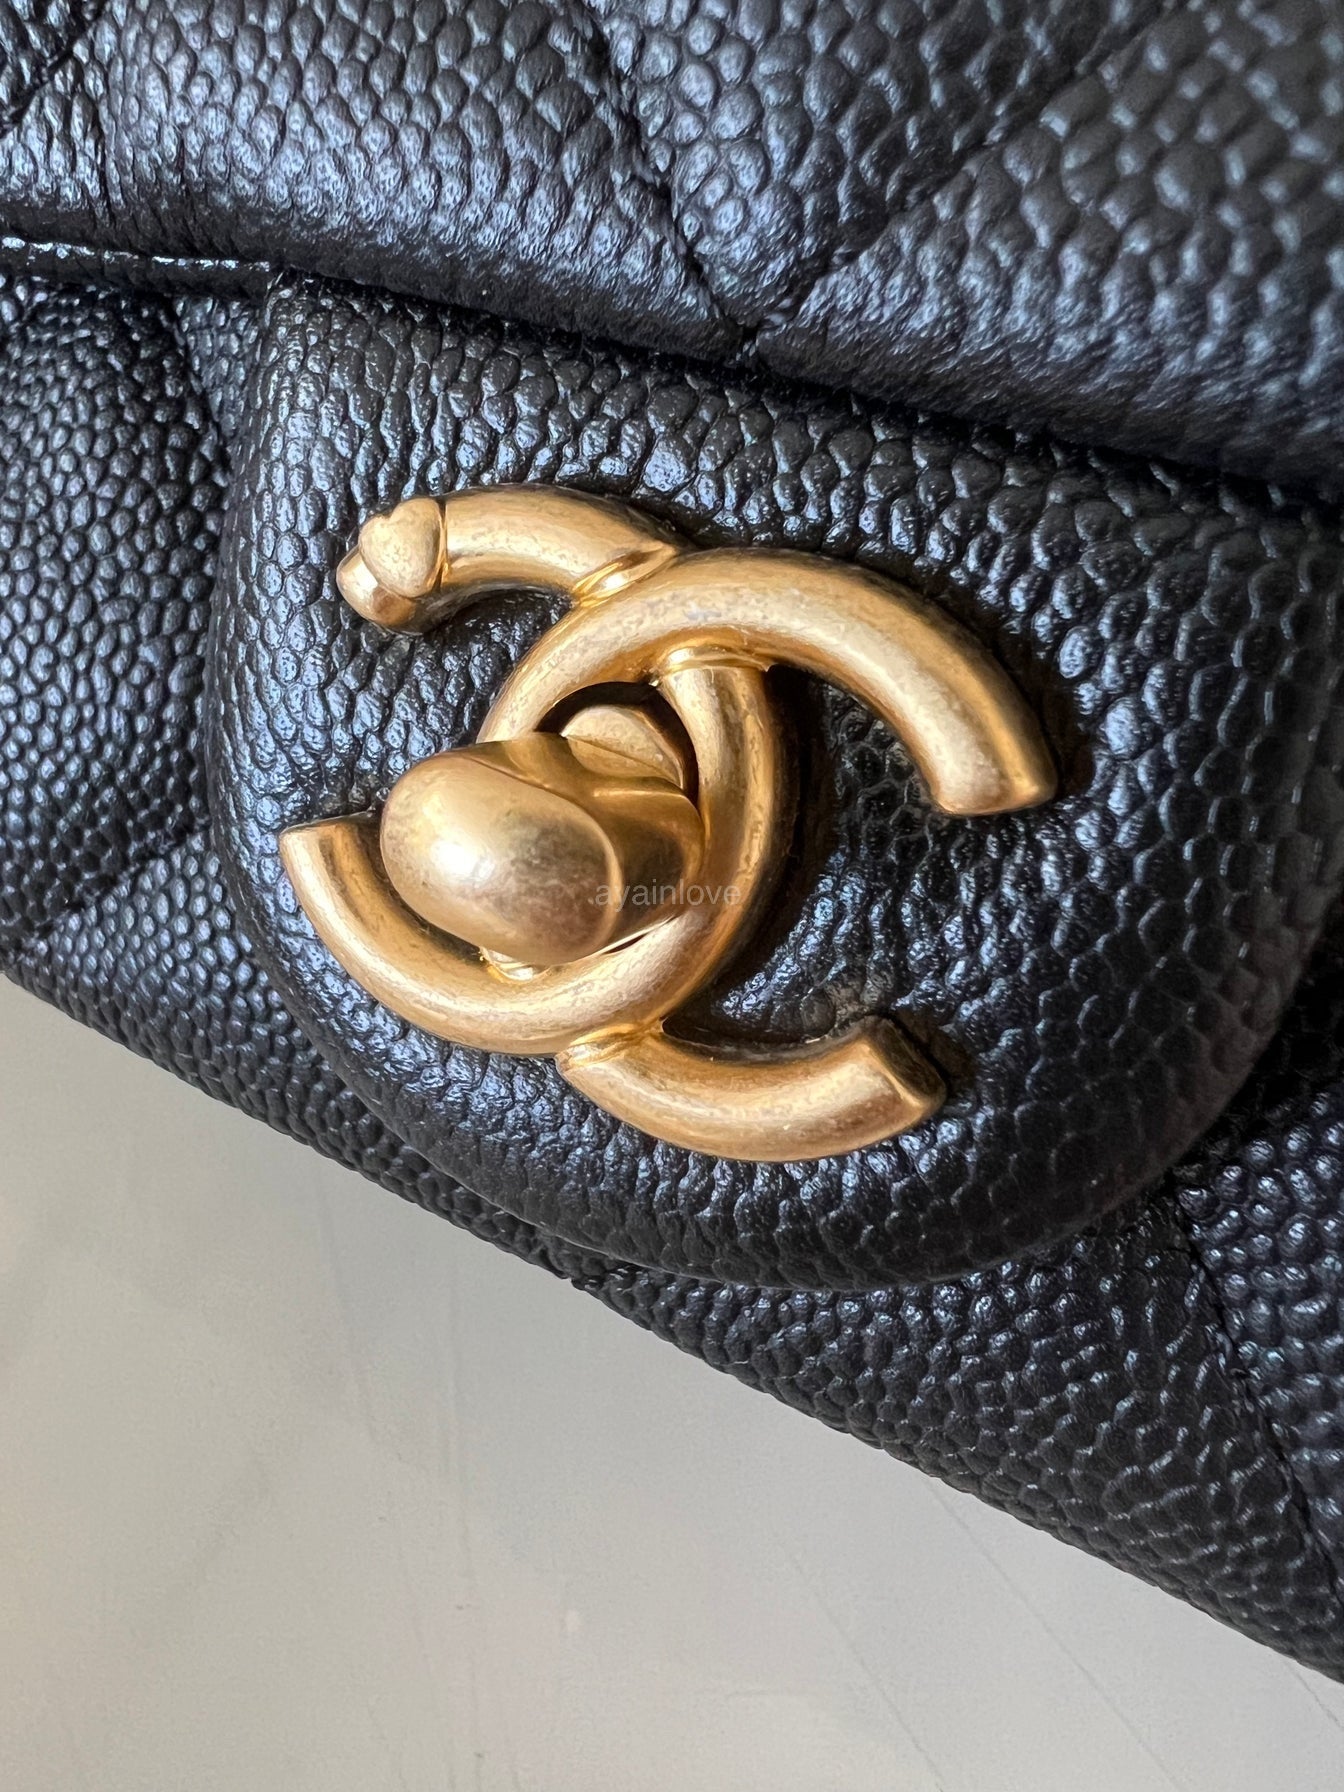 Chanel Black Calfskin Mini Pearl Chain Mini Rectangular Flap Bag